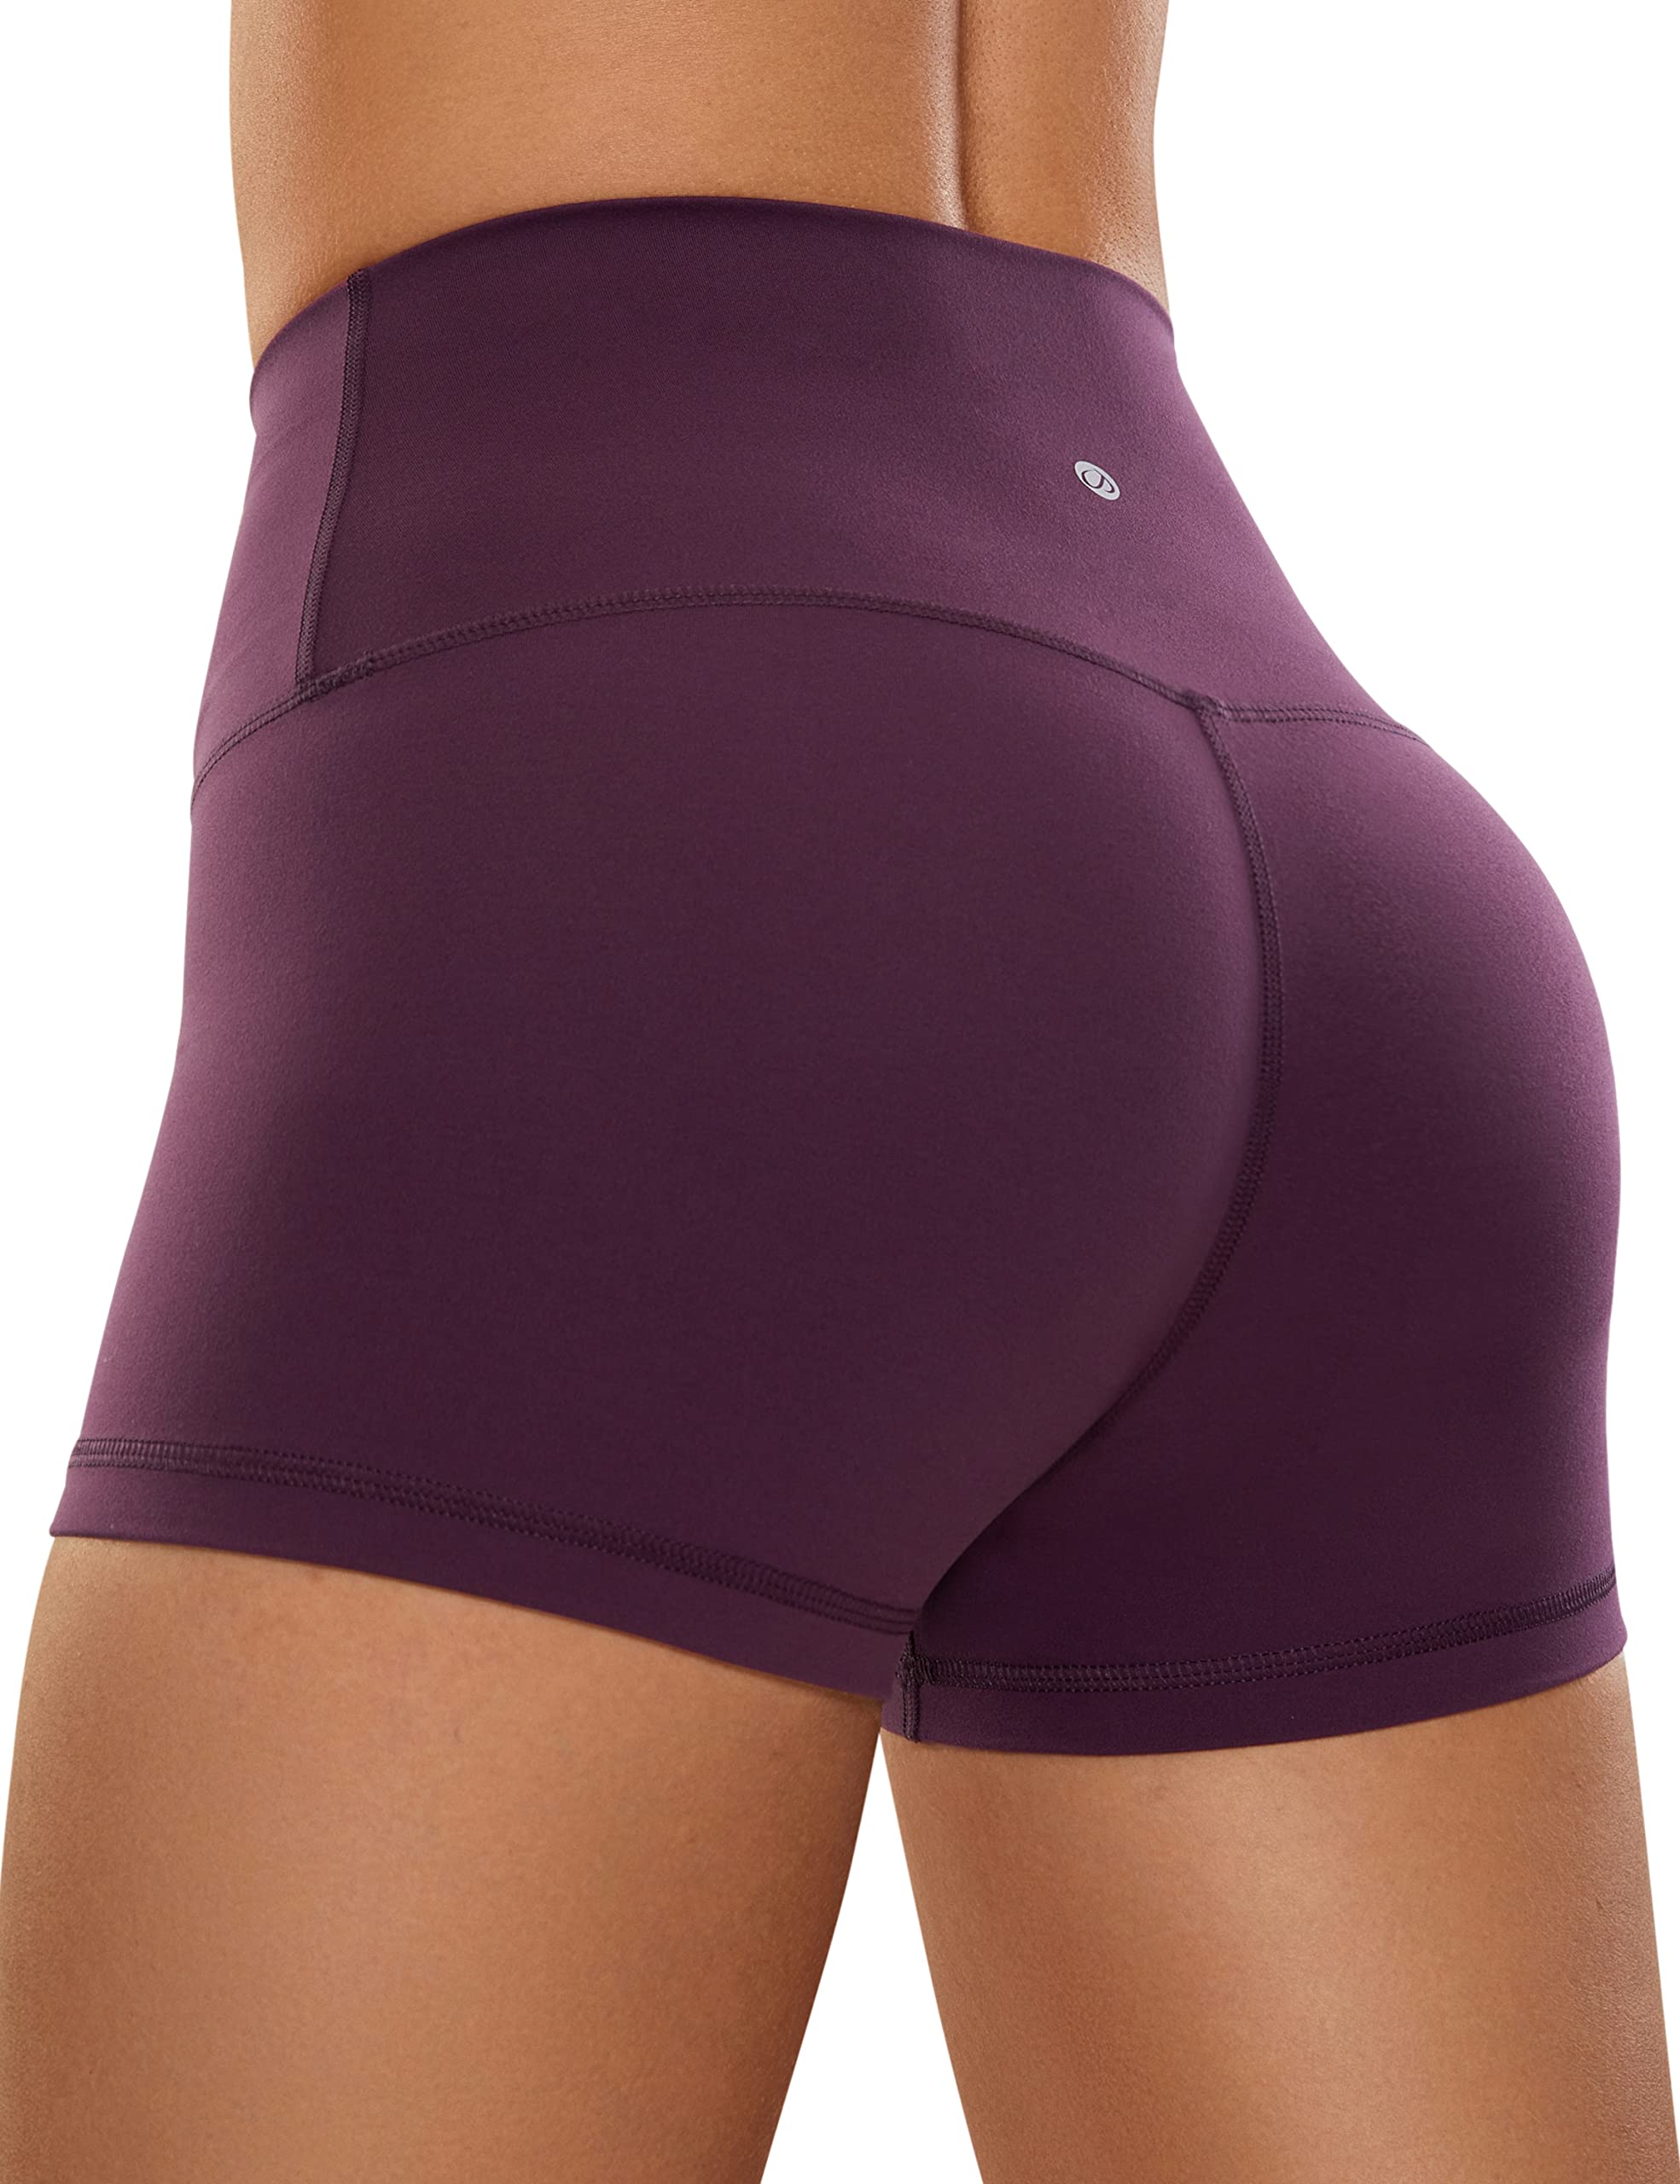 CRZ YOGA Crz Yoga Womens Butterluxe Biker Shorts 25 Inches - High